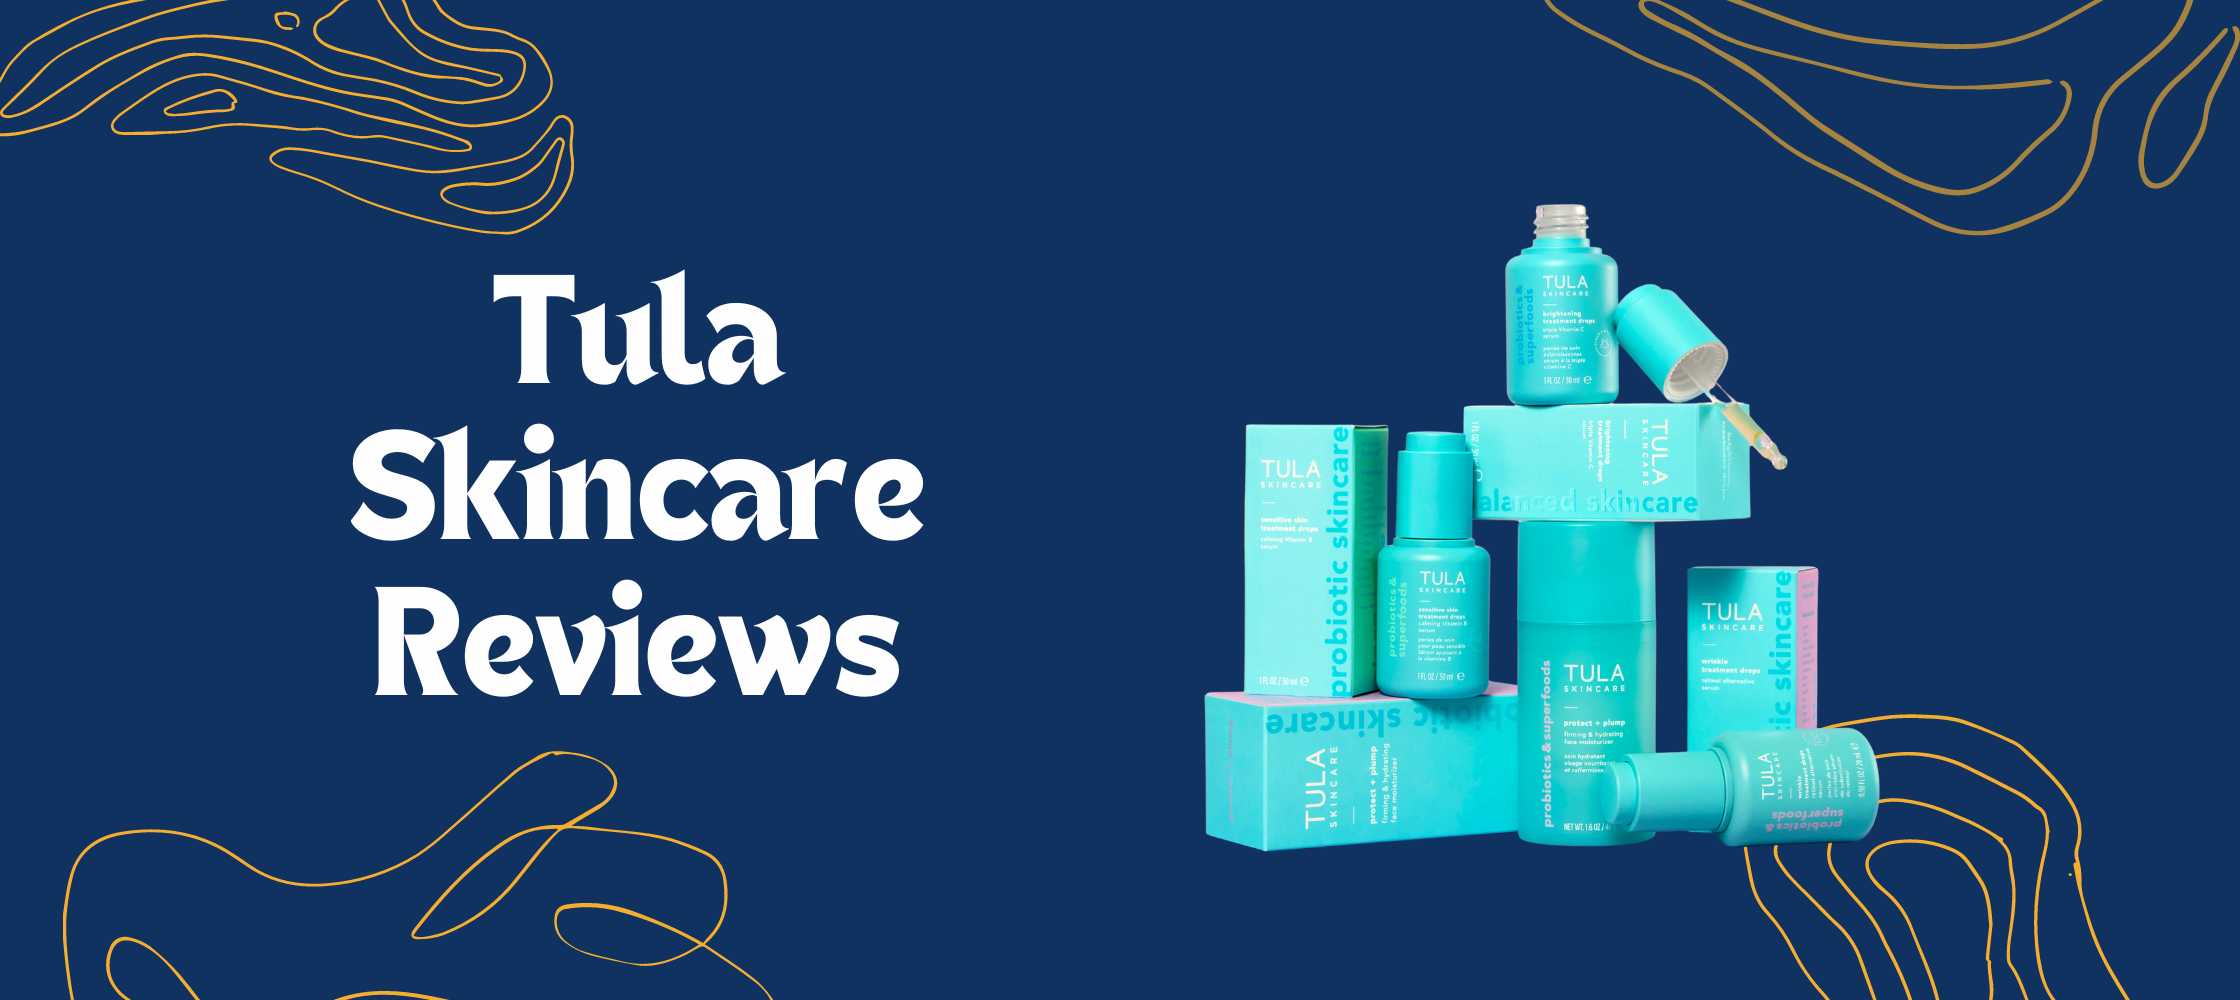 Tula Skincare Reviews